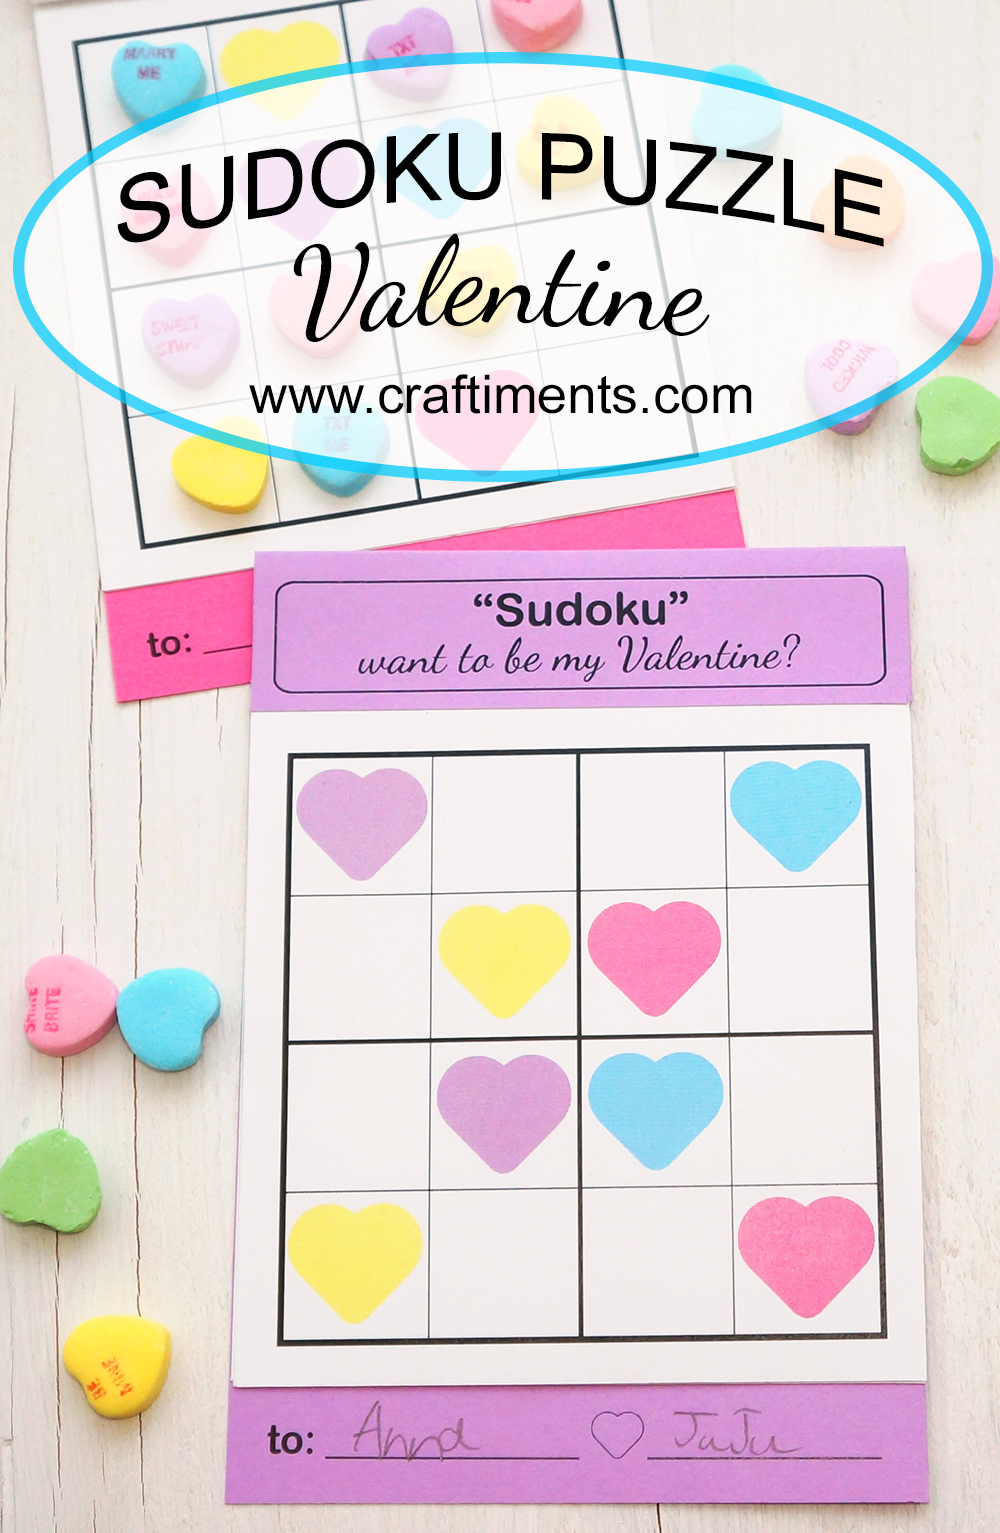 craftiments sudoku puzzle valentine